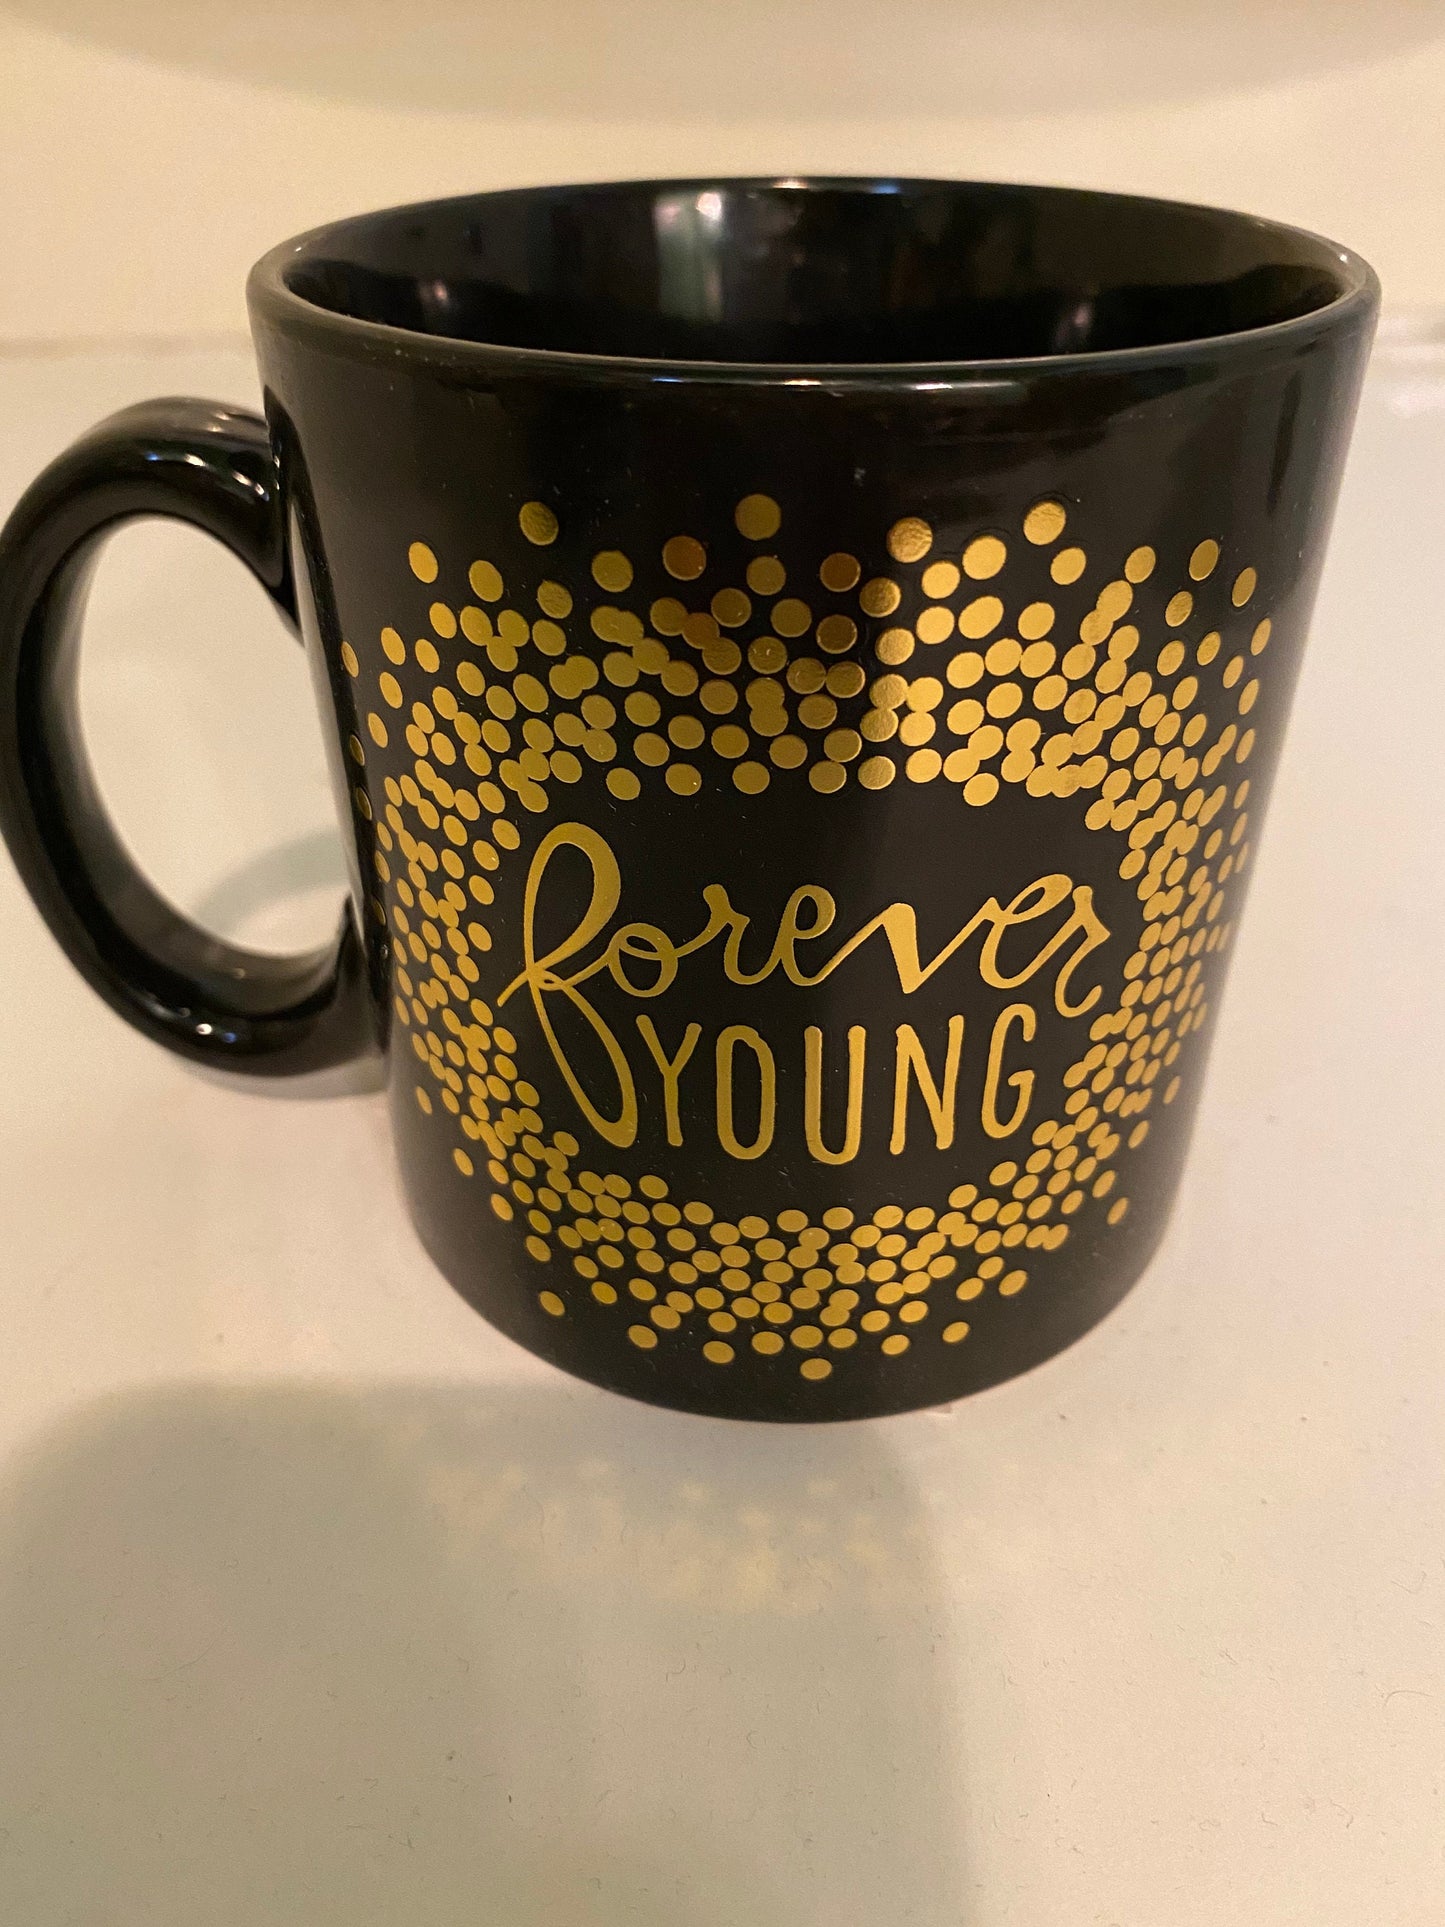 Forever Young Coffee Mug